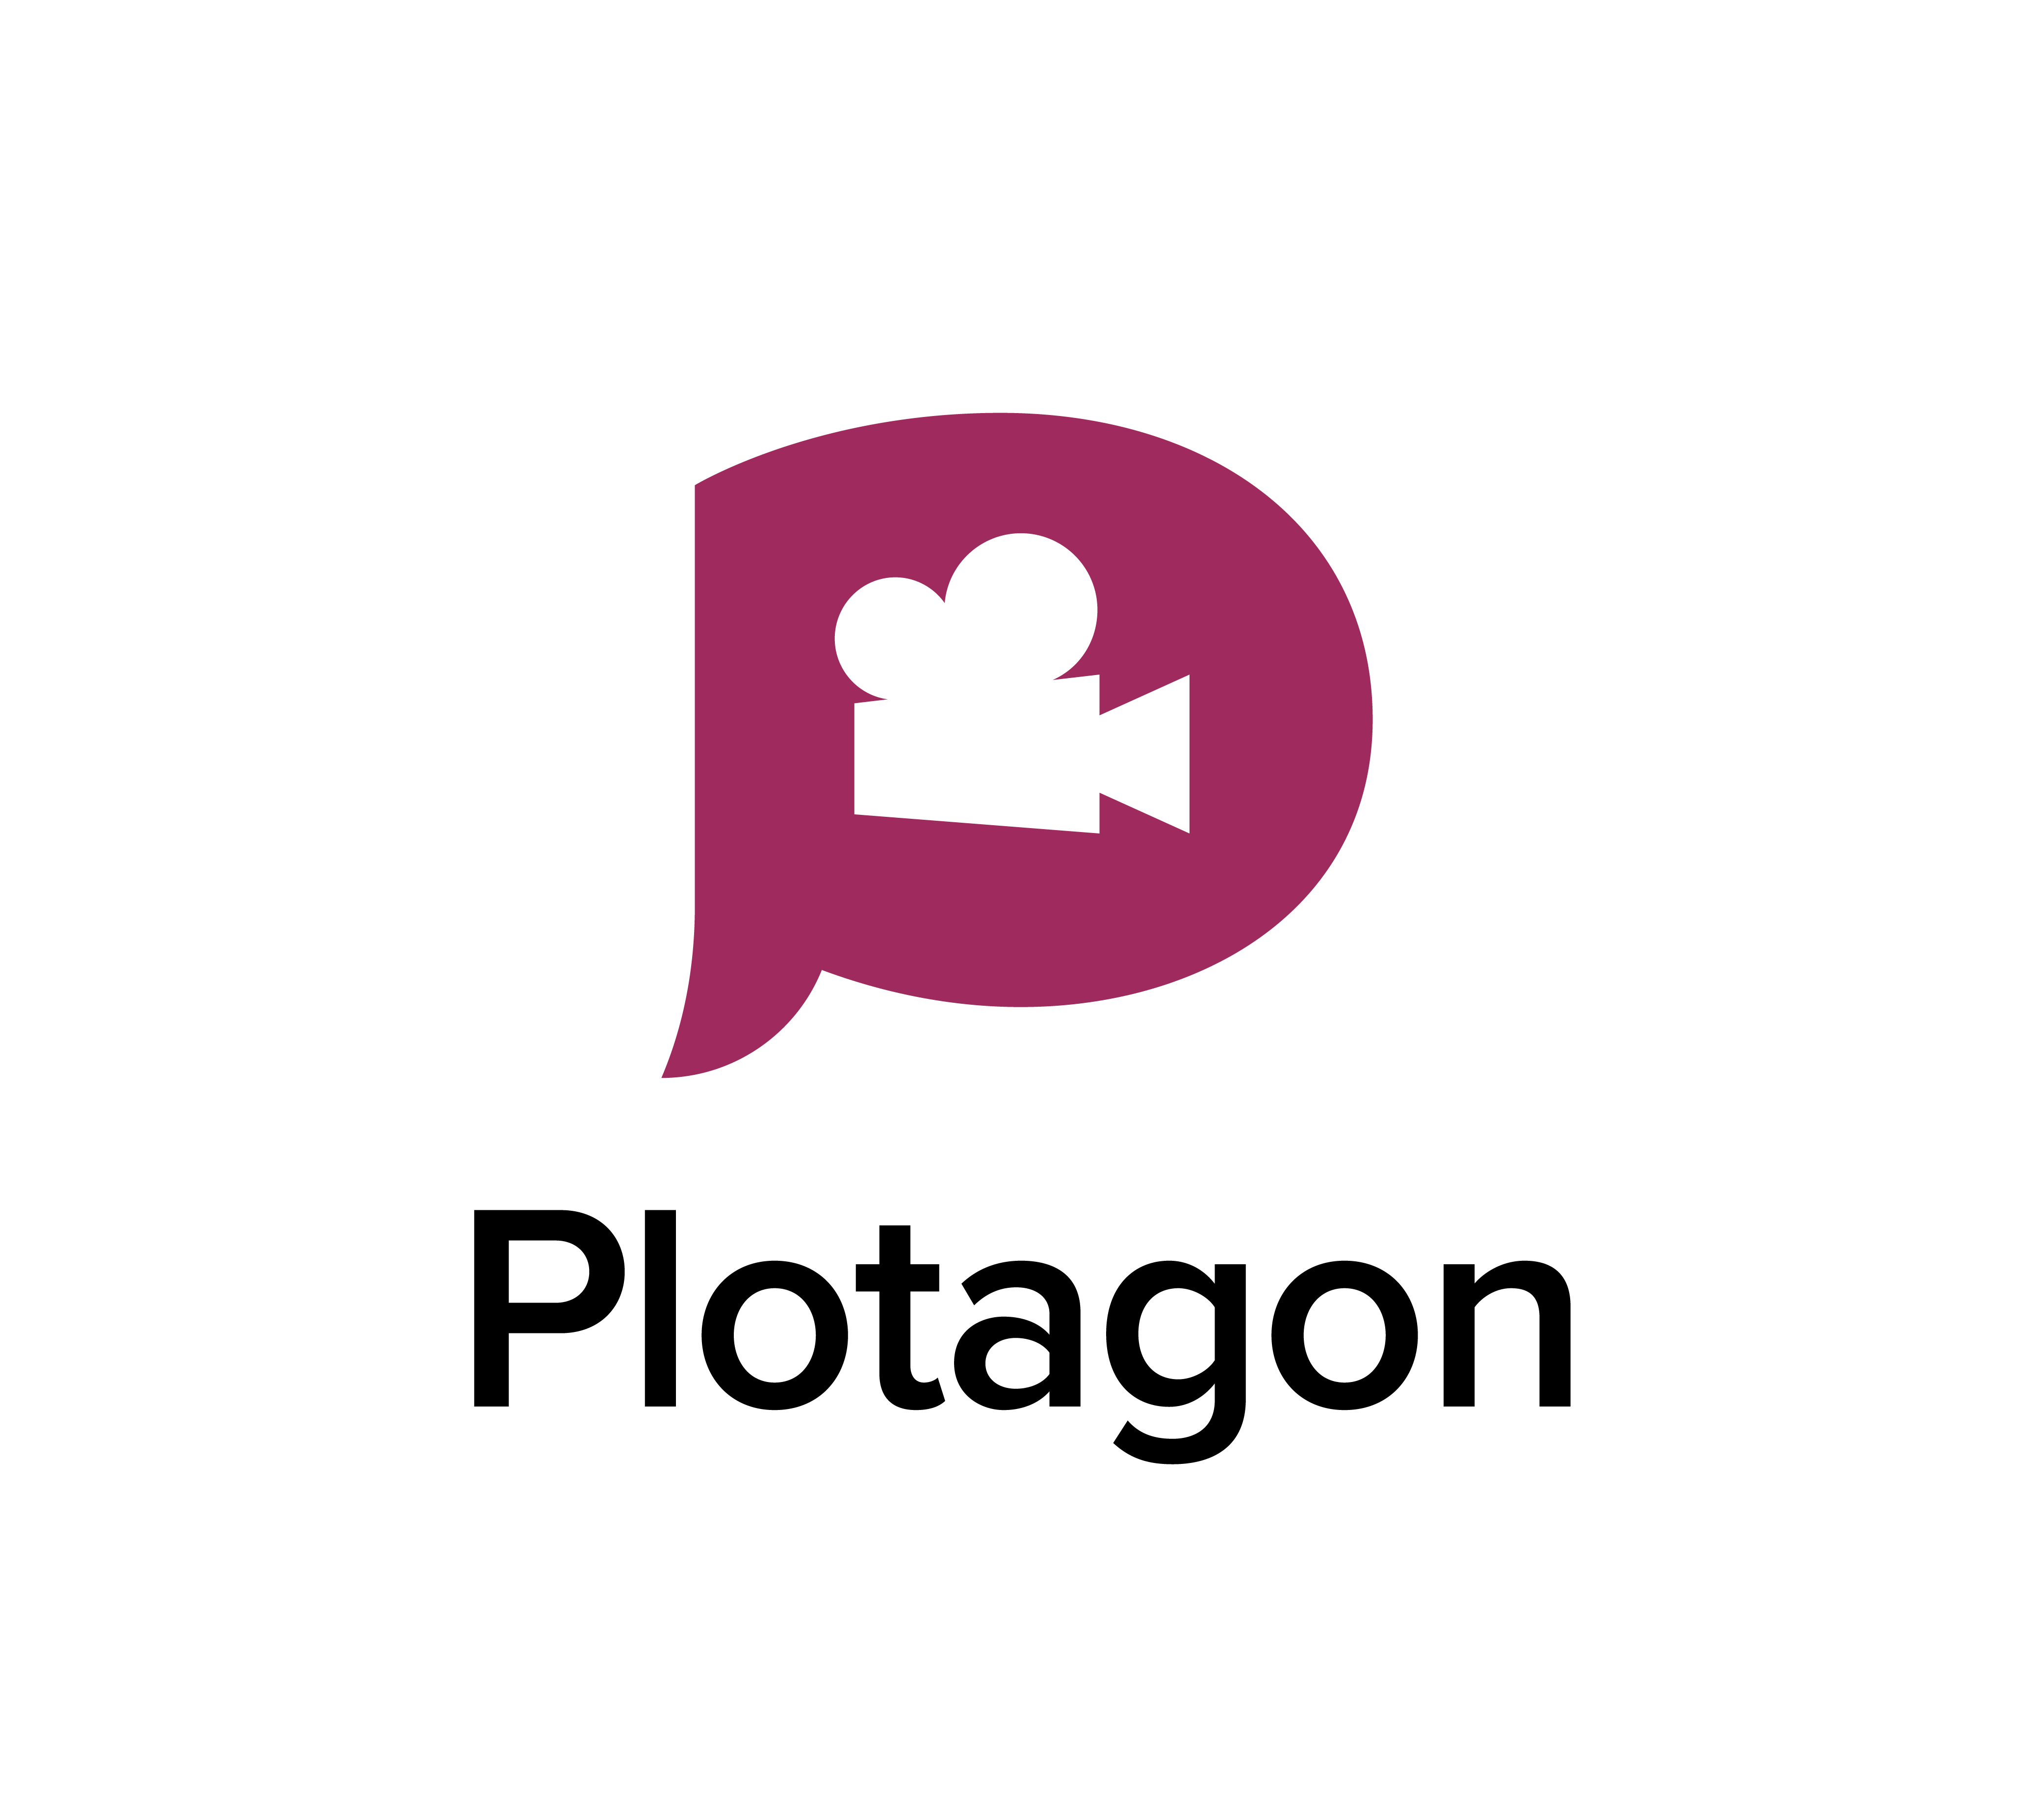 plotagon download full